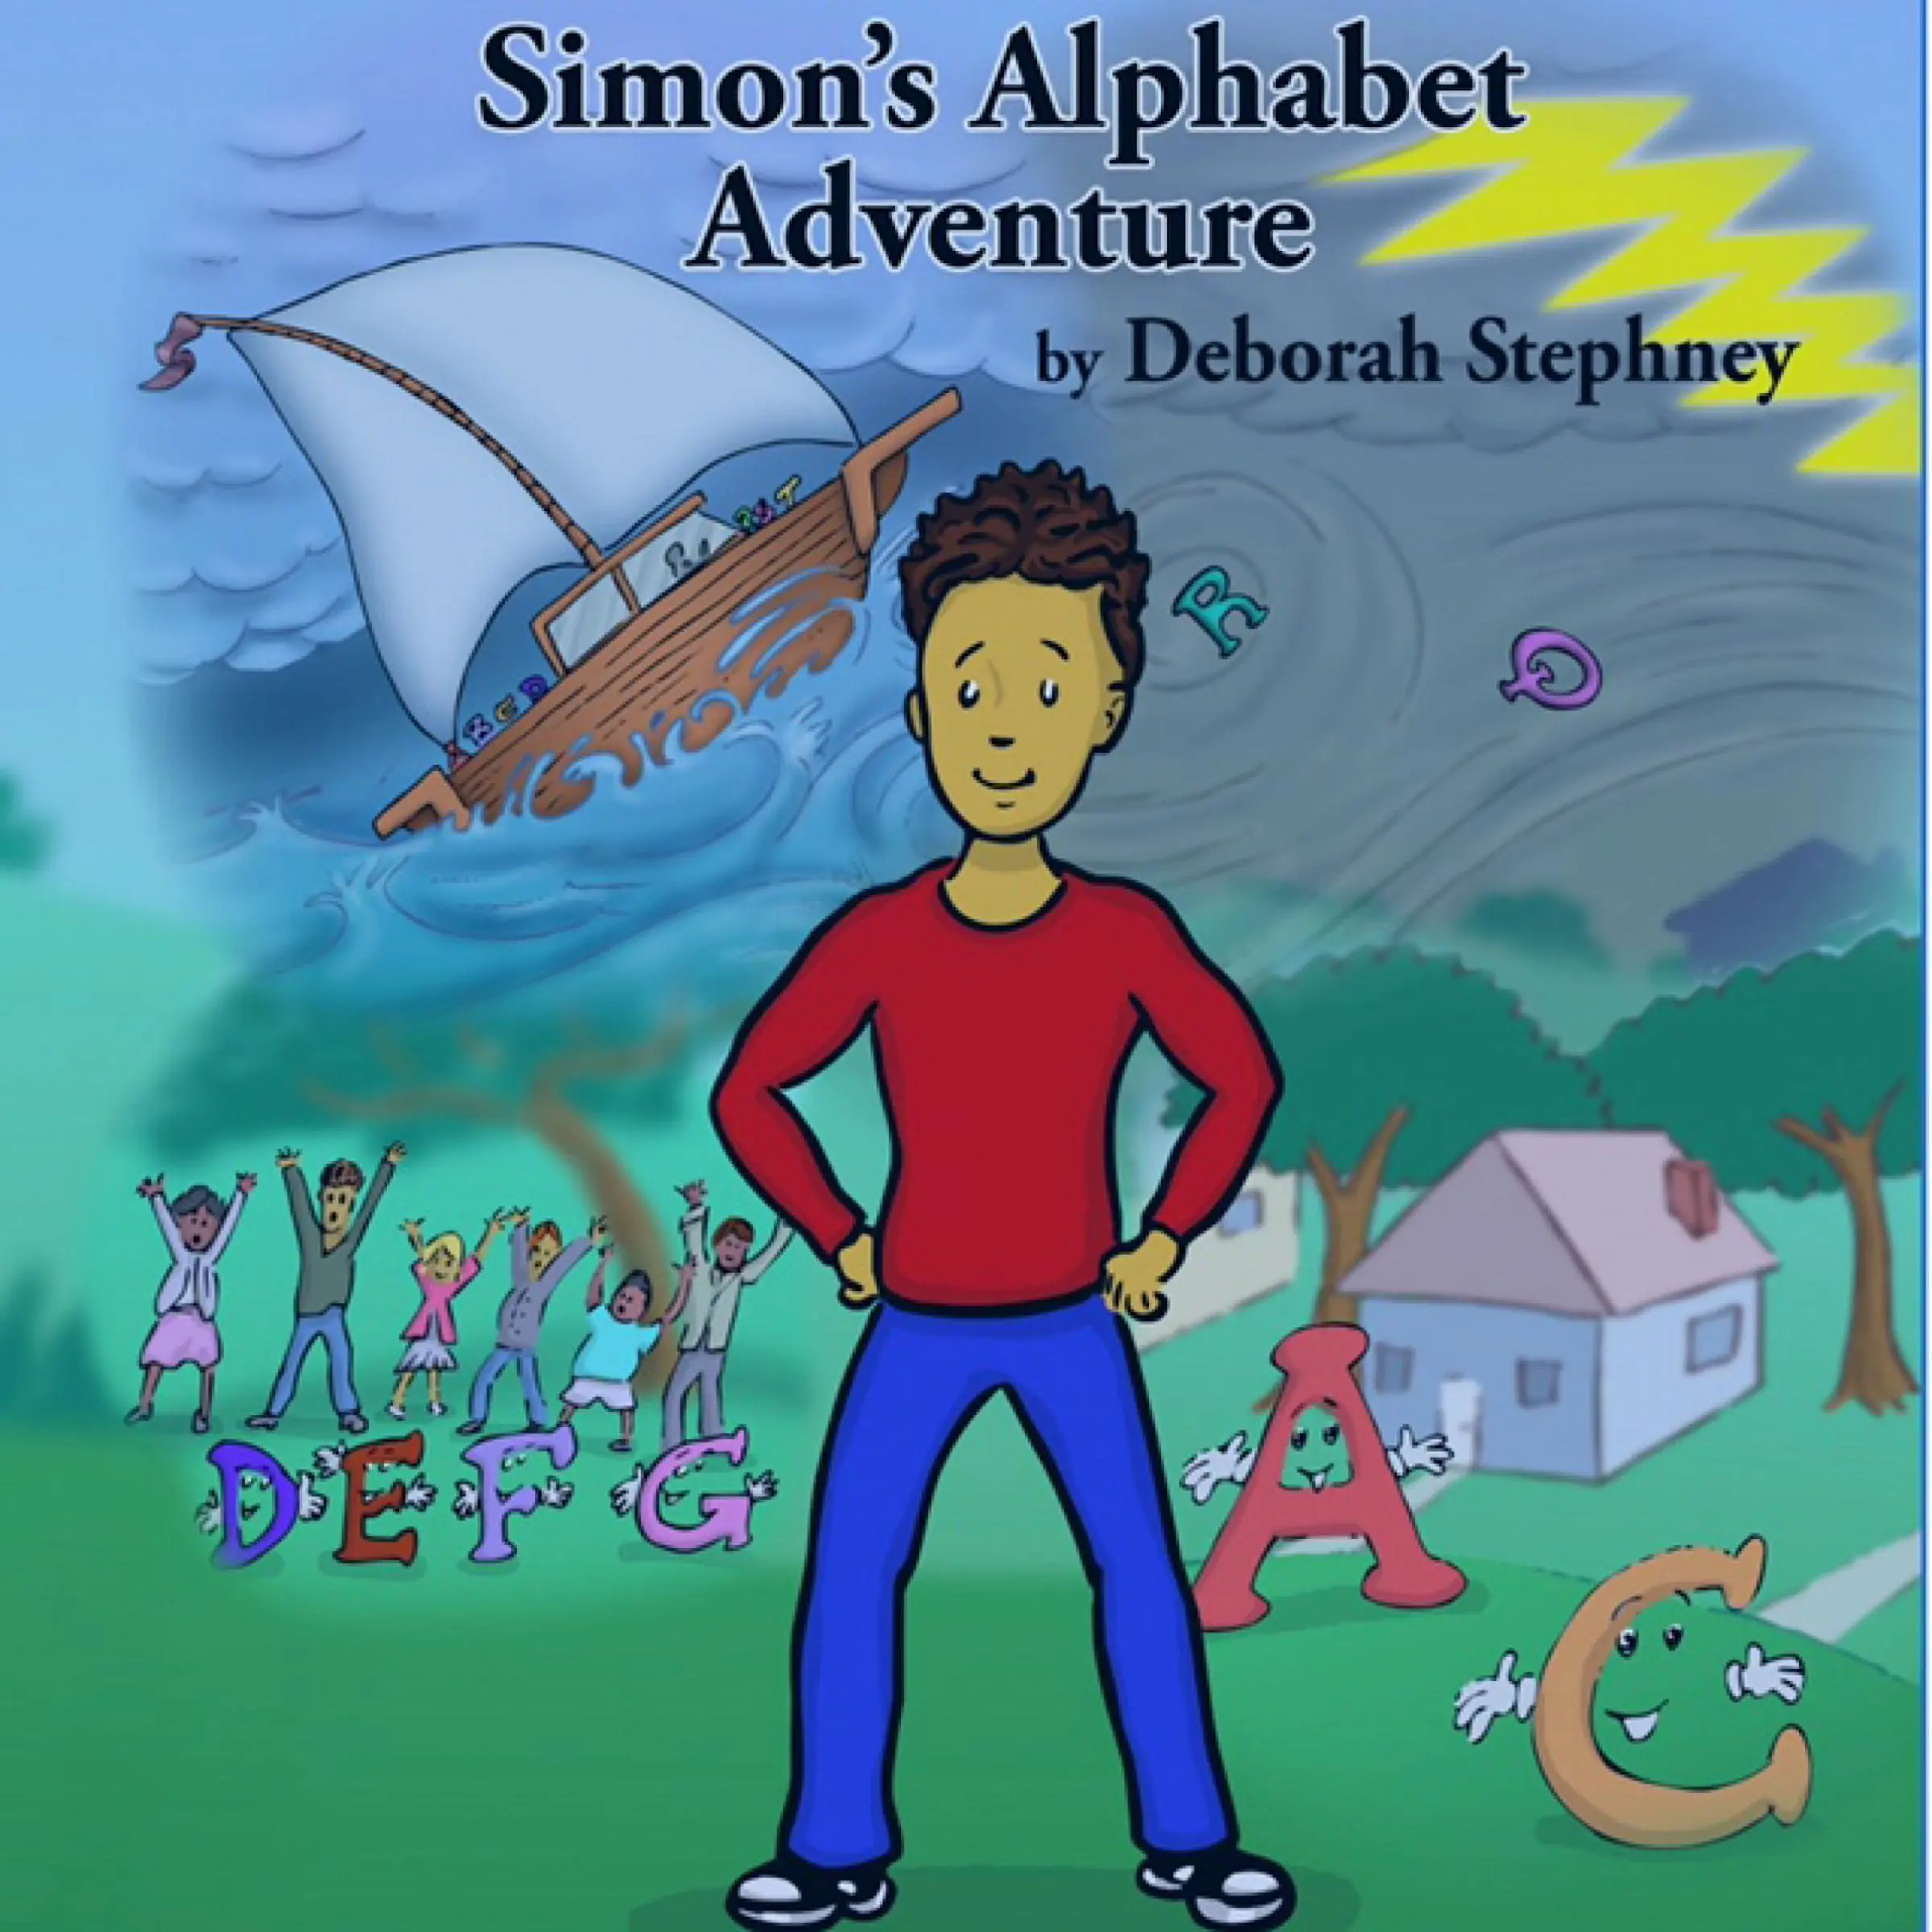 Simon's Alphabet Adventure Audiobook by Deborah Stephney